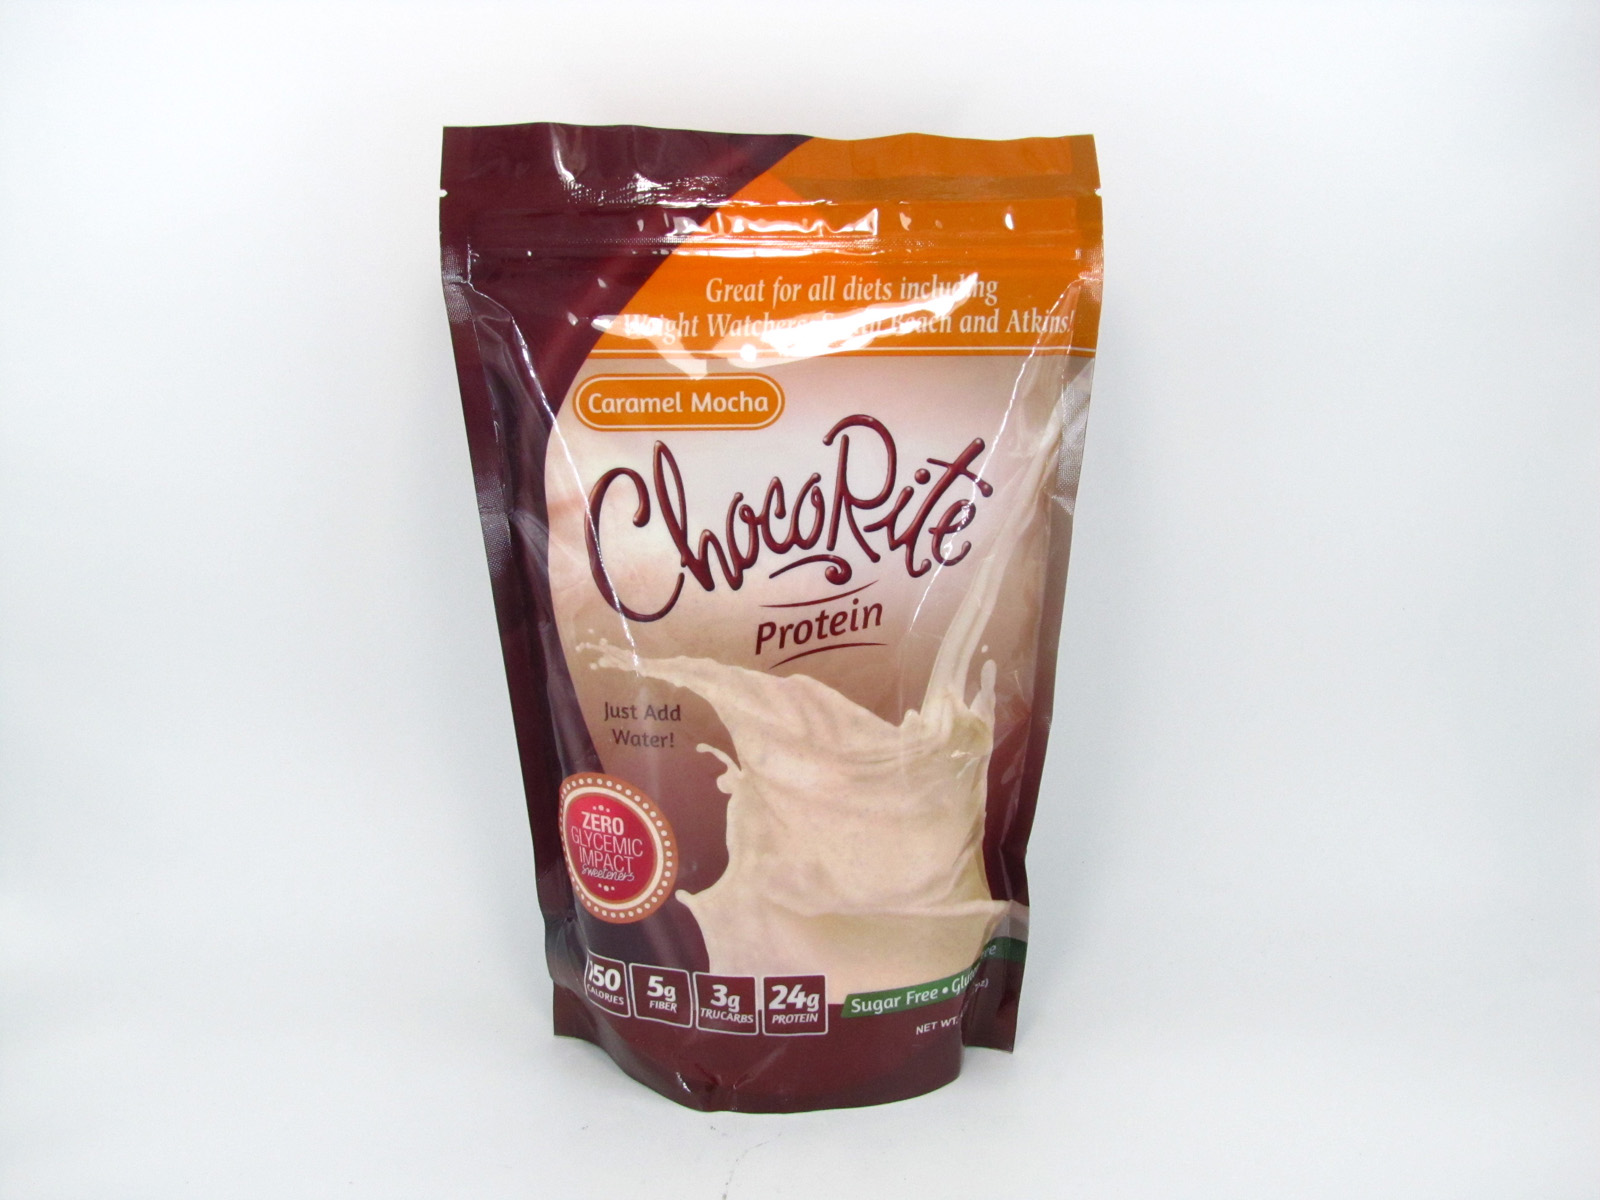 Chocorite Protein Shake (1lb) - Caramel Mocha - front view